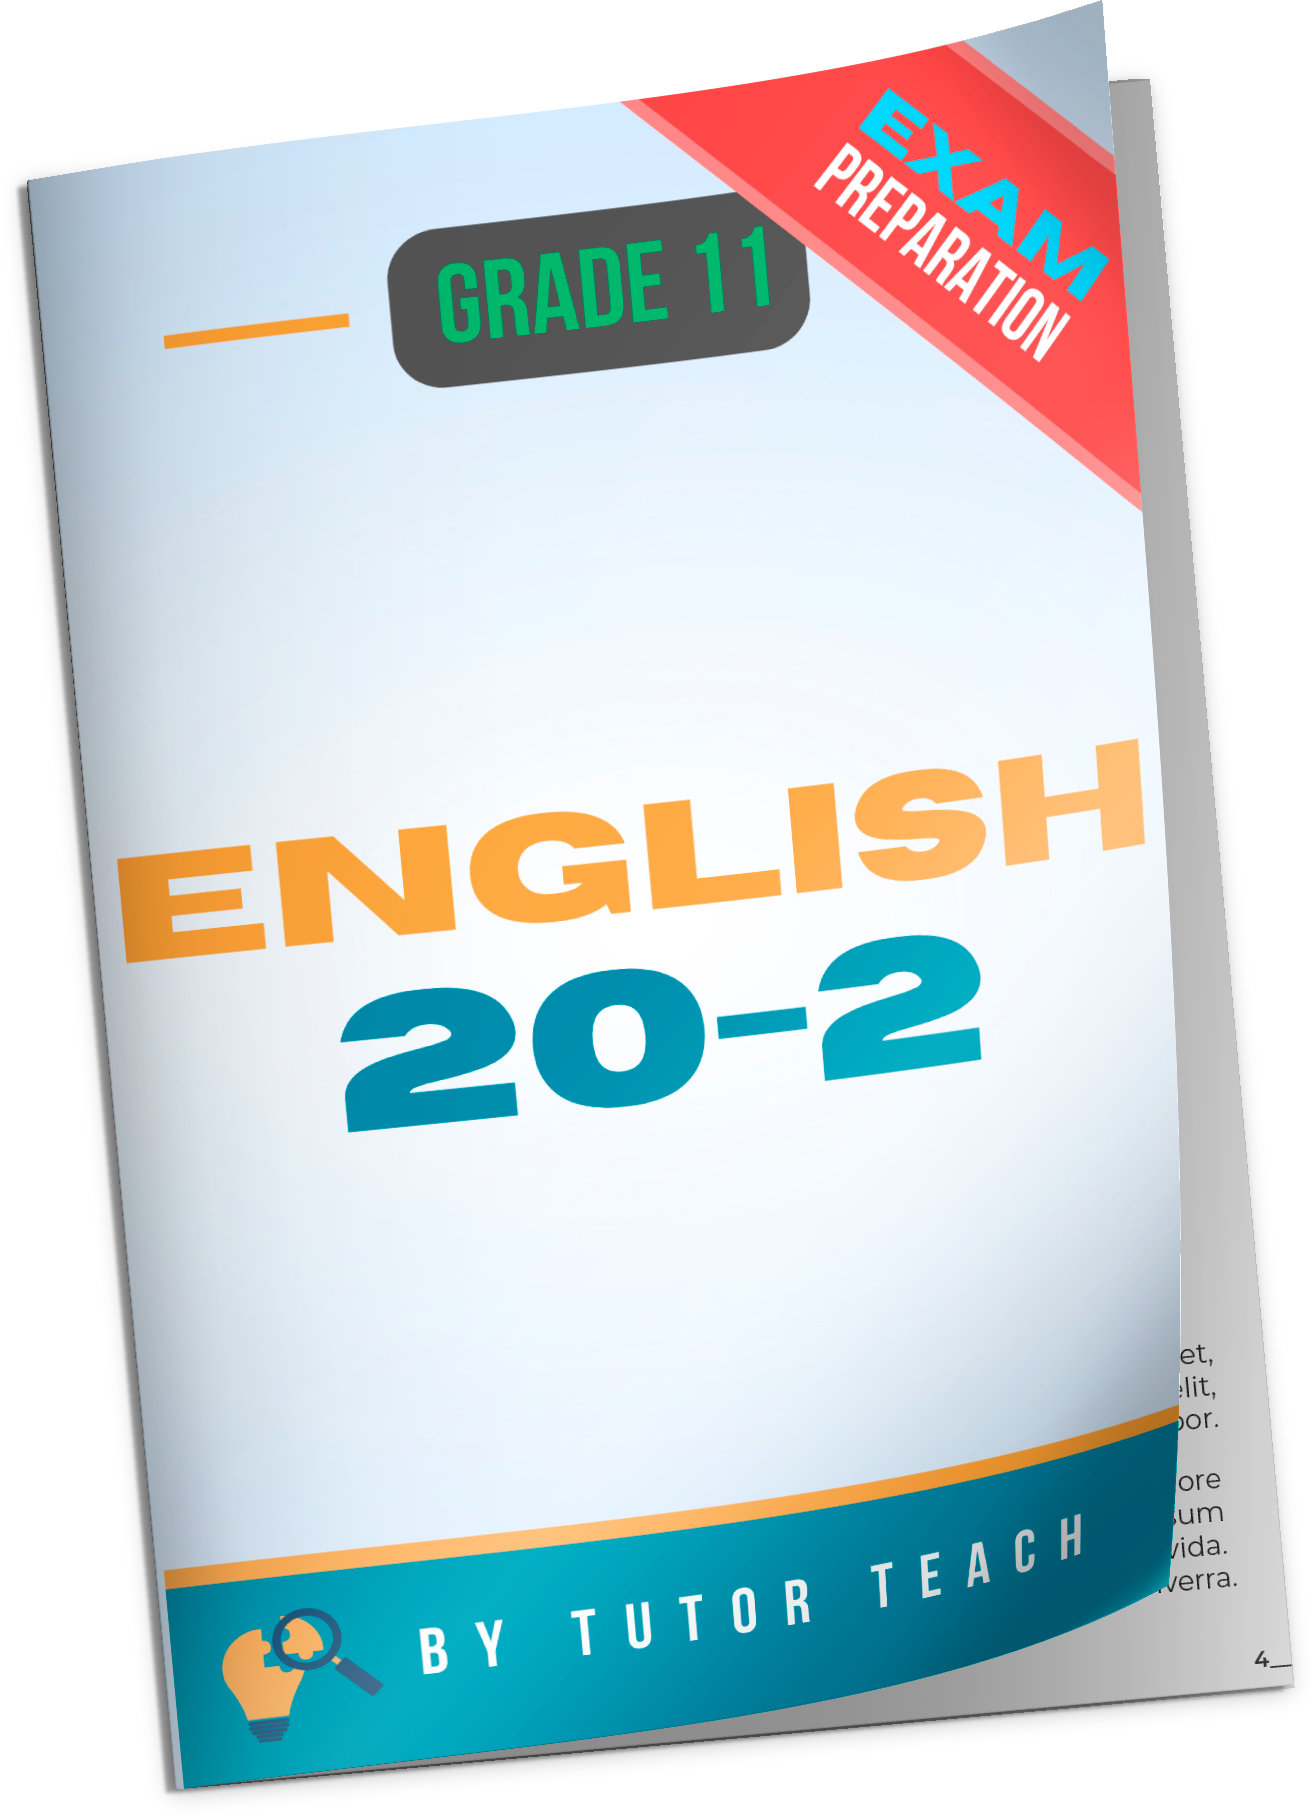 English 20-2 exam prep